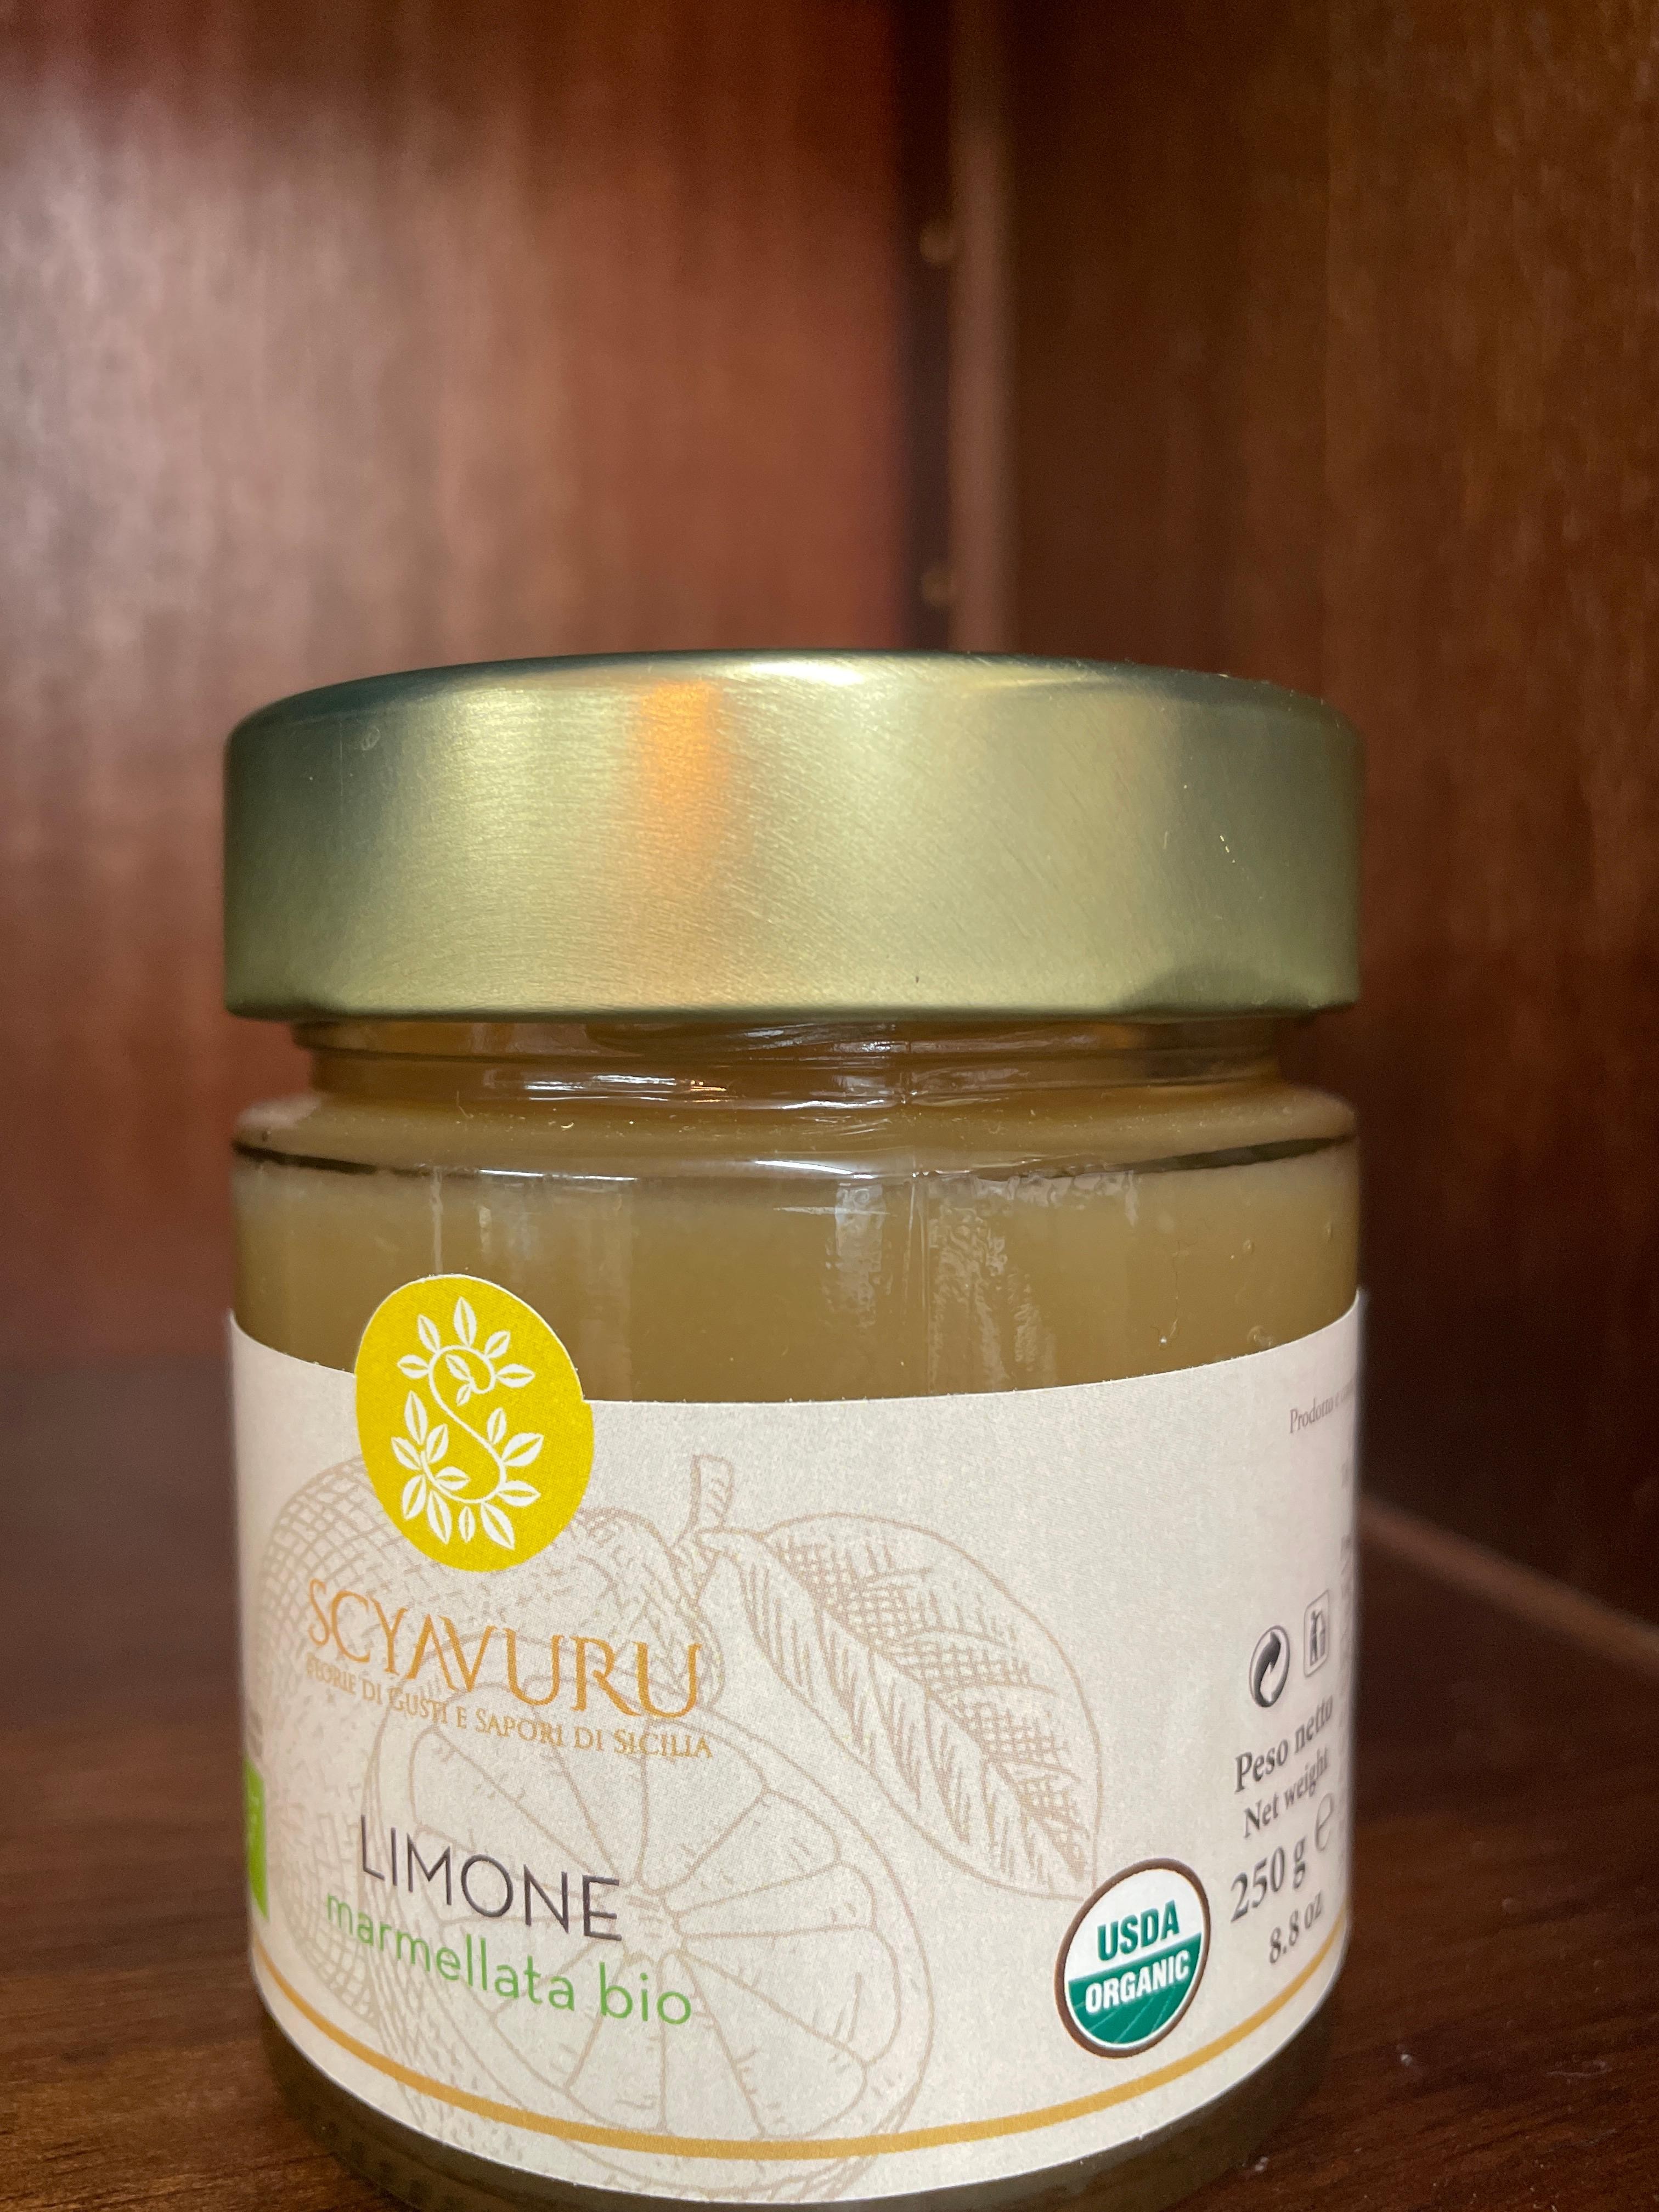 Scyavuru Organic Sicilian Lemon Marmalade